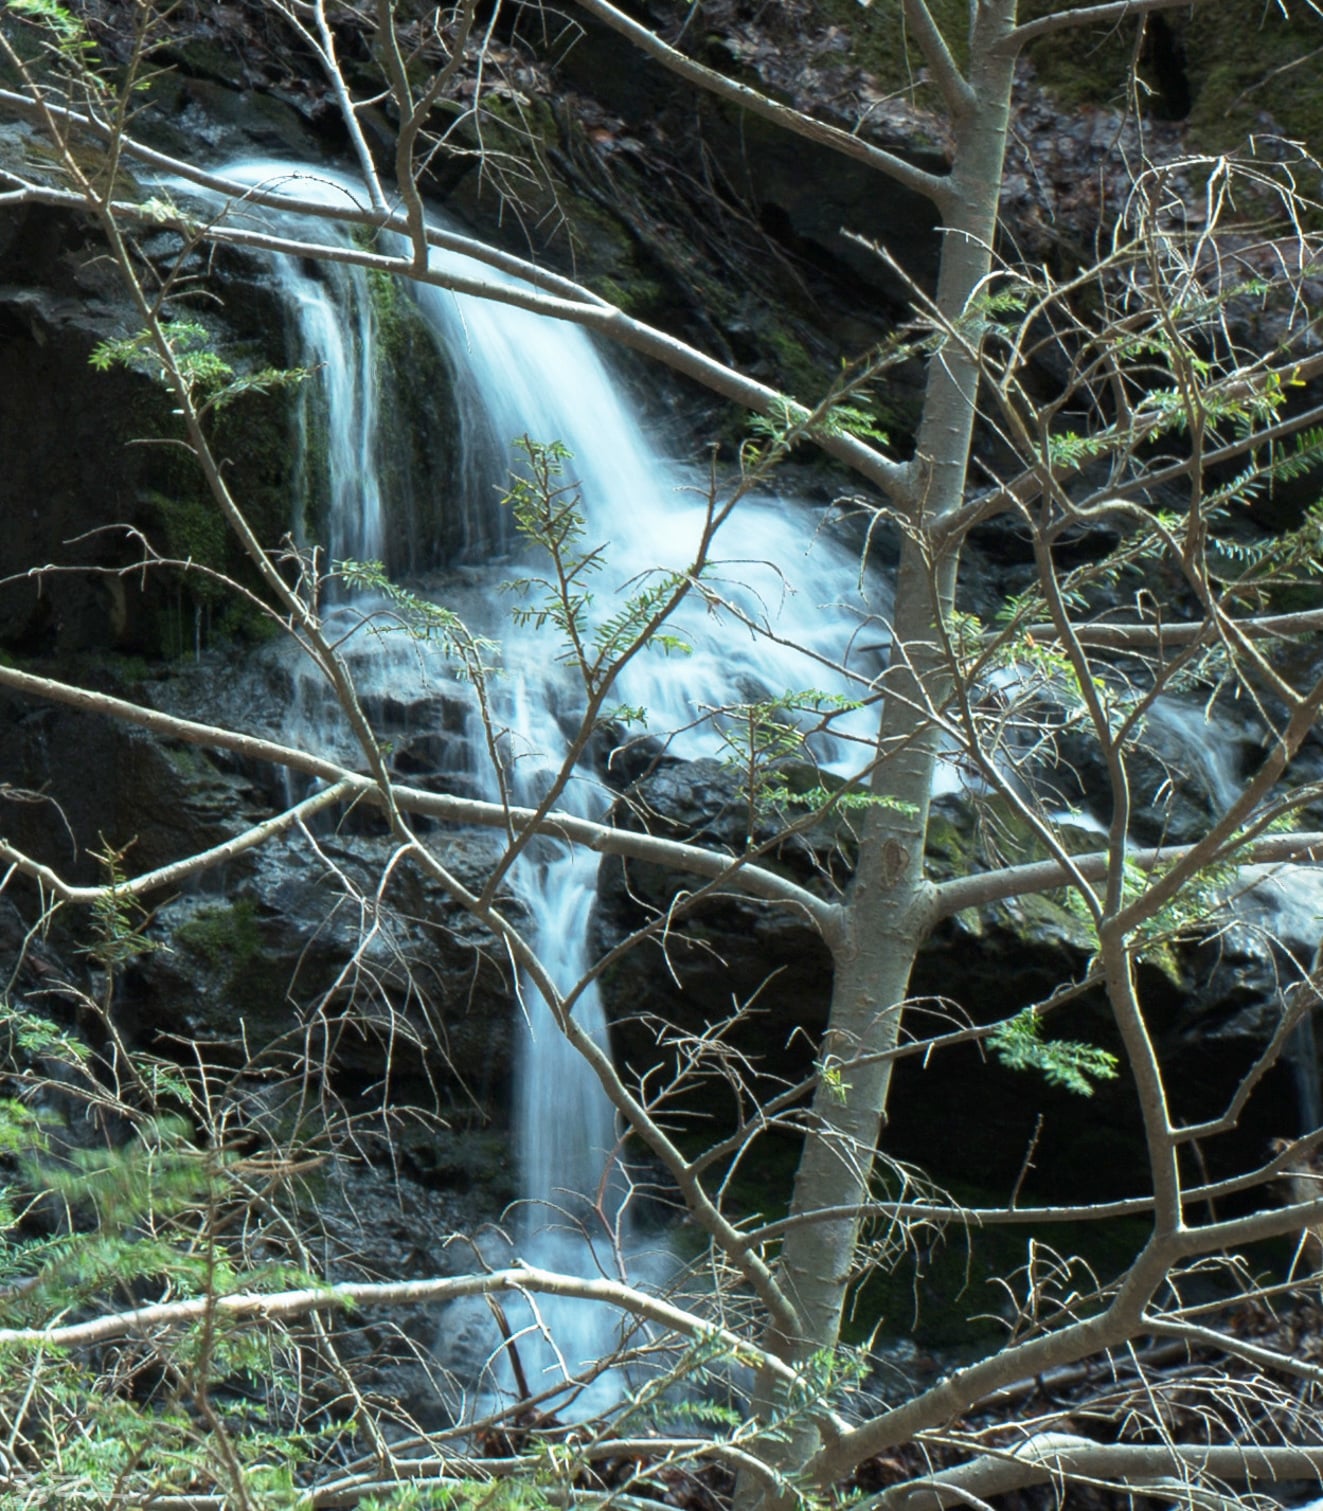 Catskills Hiking: water fall everywhere